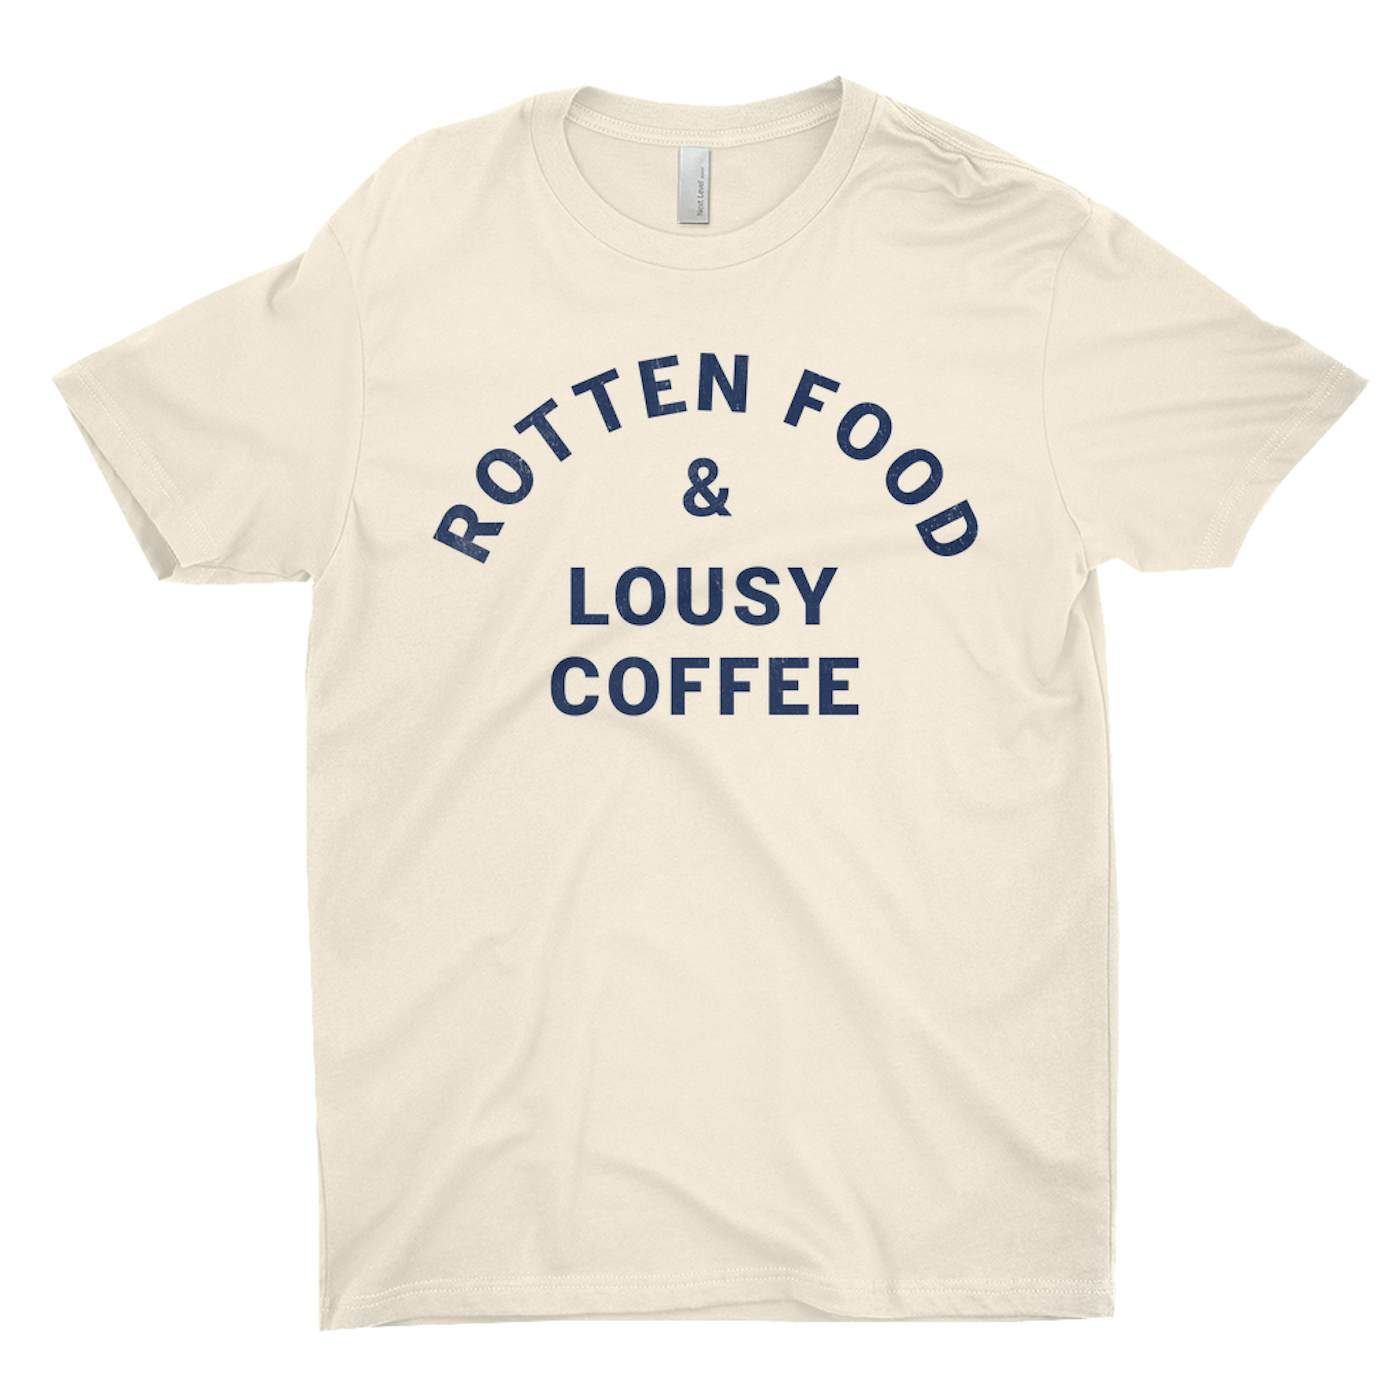 Joe Cocker T-Shirt | Rotten Food & Lousy Coffee Tee worn by Joe Cocker Shirt